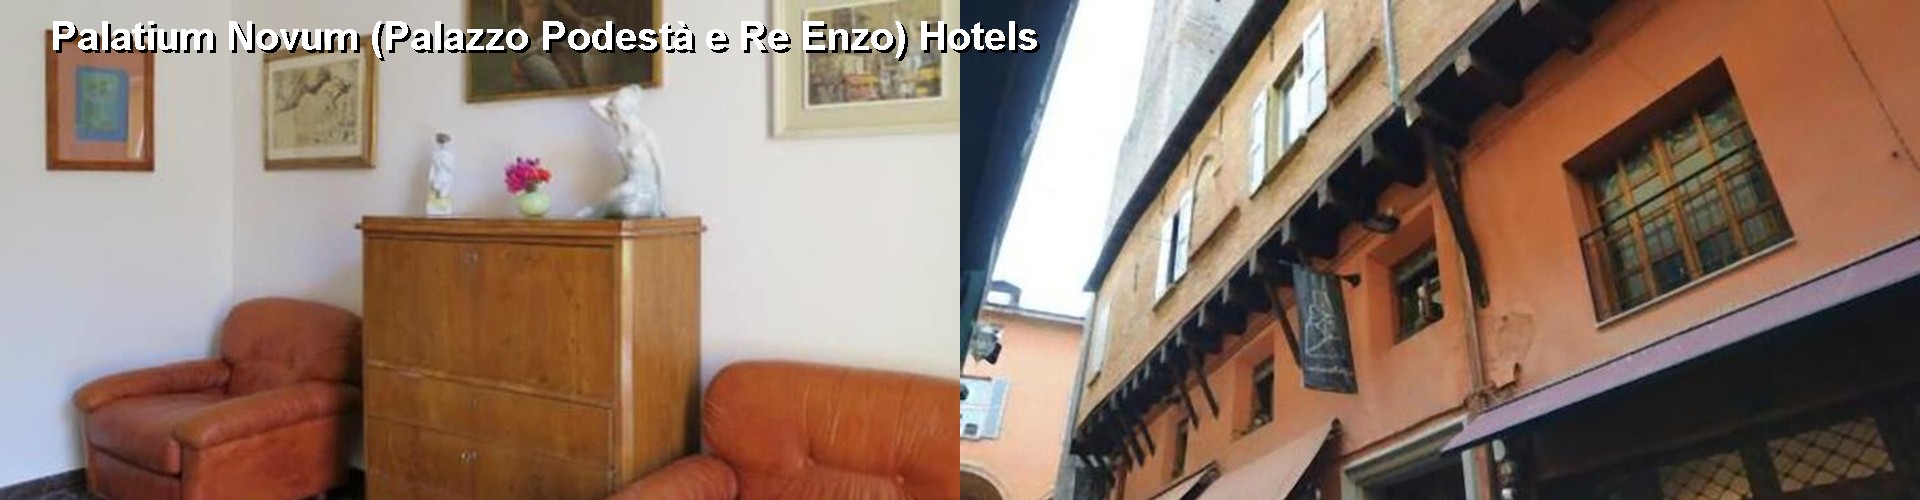 5 Best Hotels near Palatium Novum (Palazzo Podestà e Re Enzo)